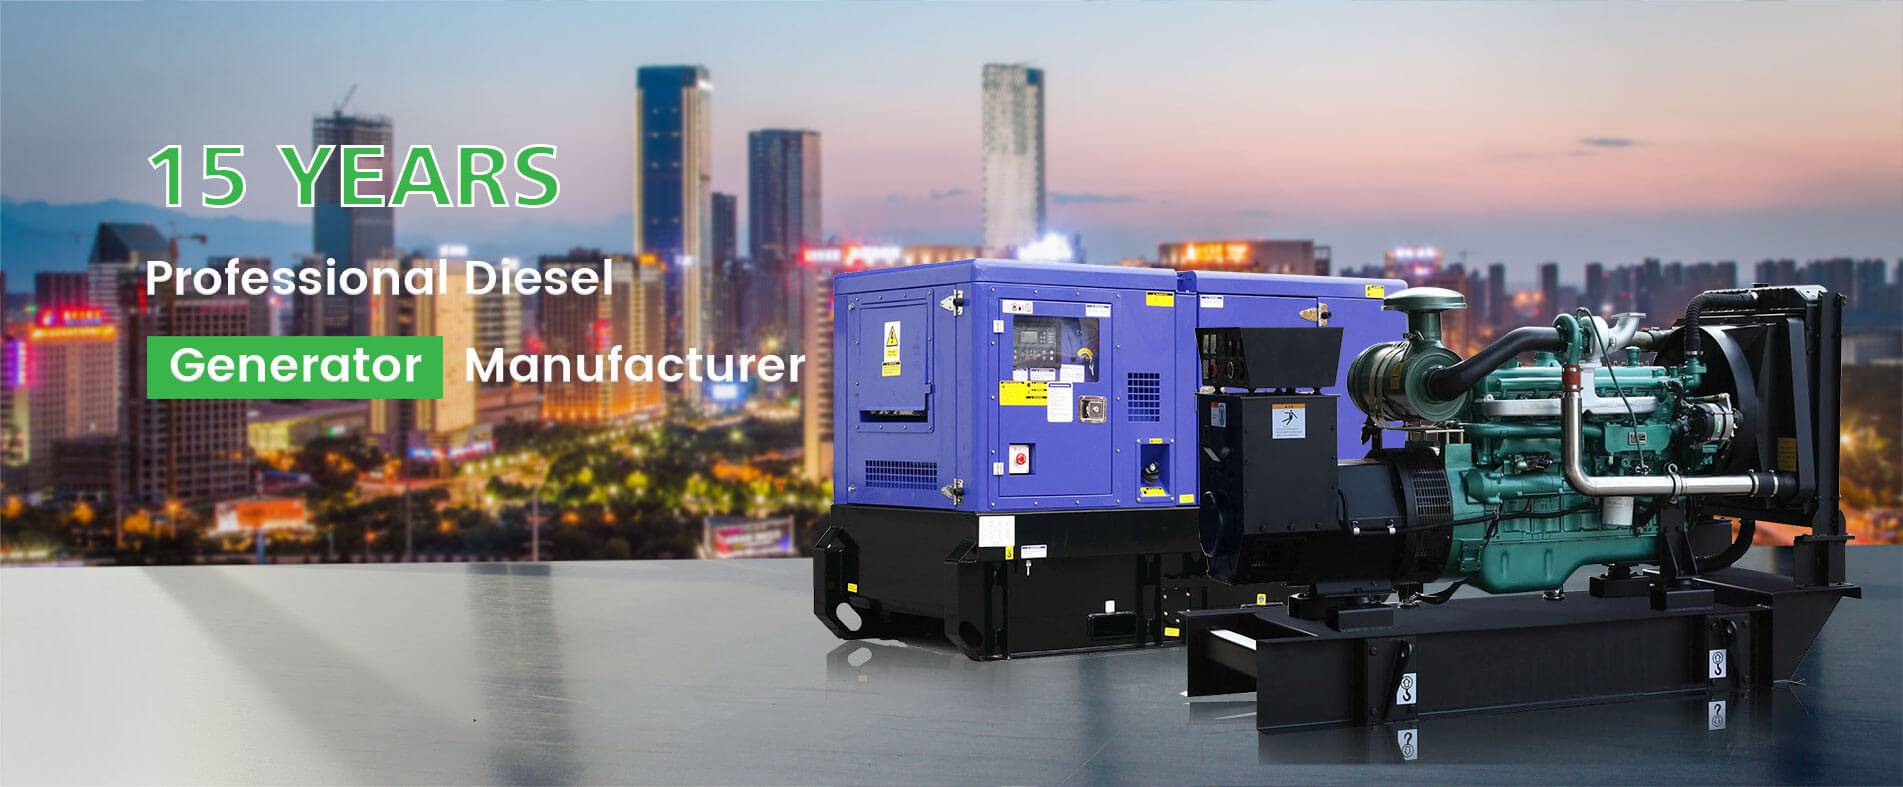 Professional Diesel Generator Manufacturer